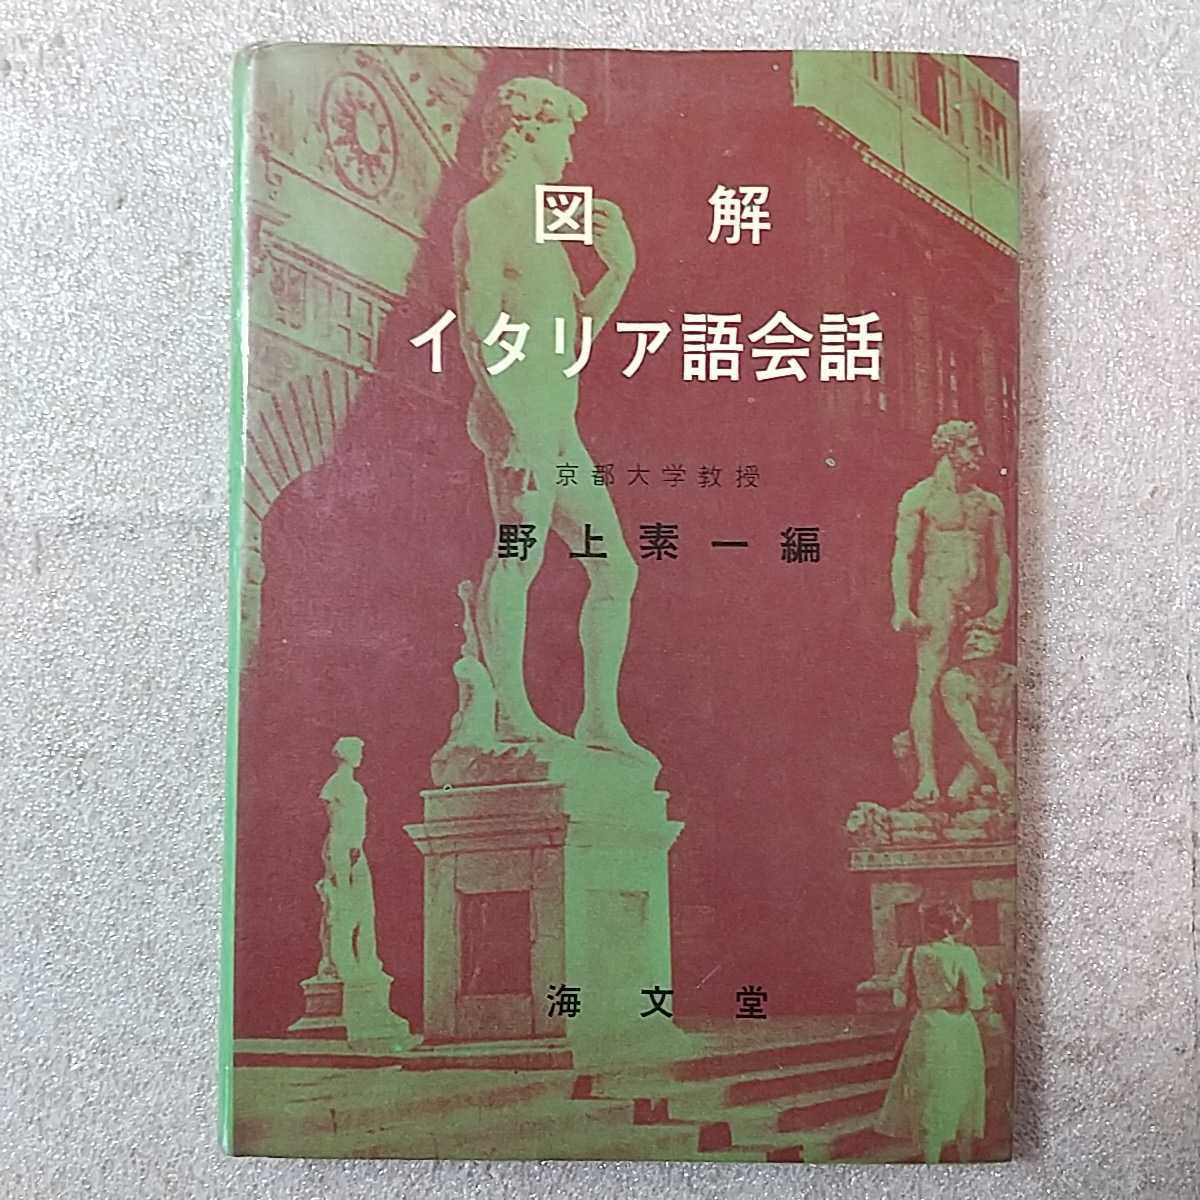 zaa-331♪図解イタリア語会話 　野上素一 (著)　 海文堂出版　1969/2/10